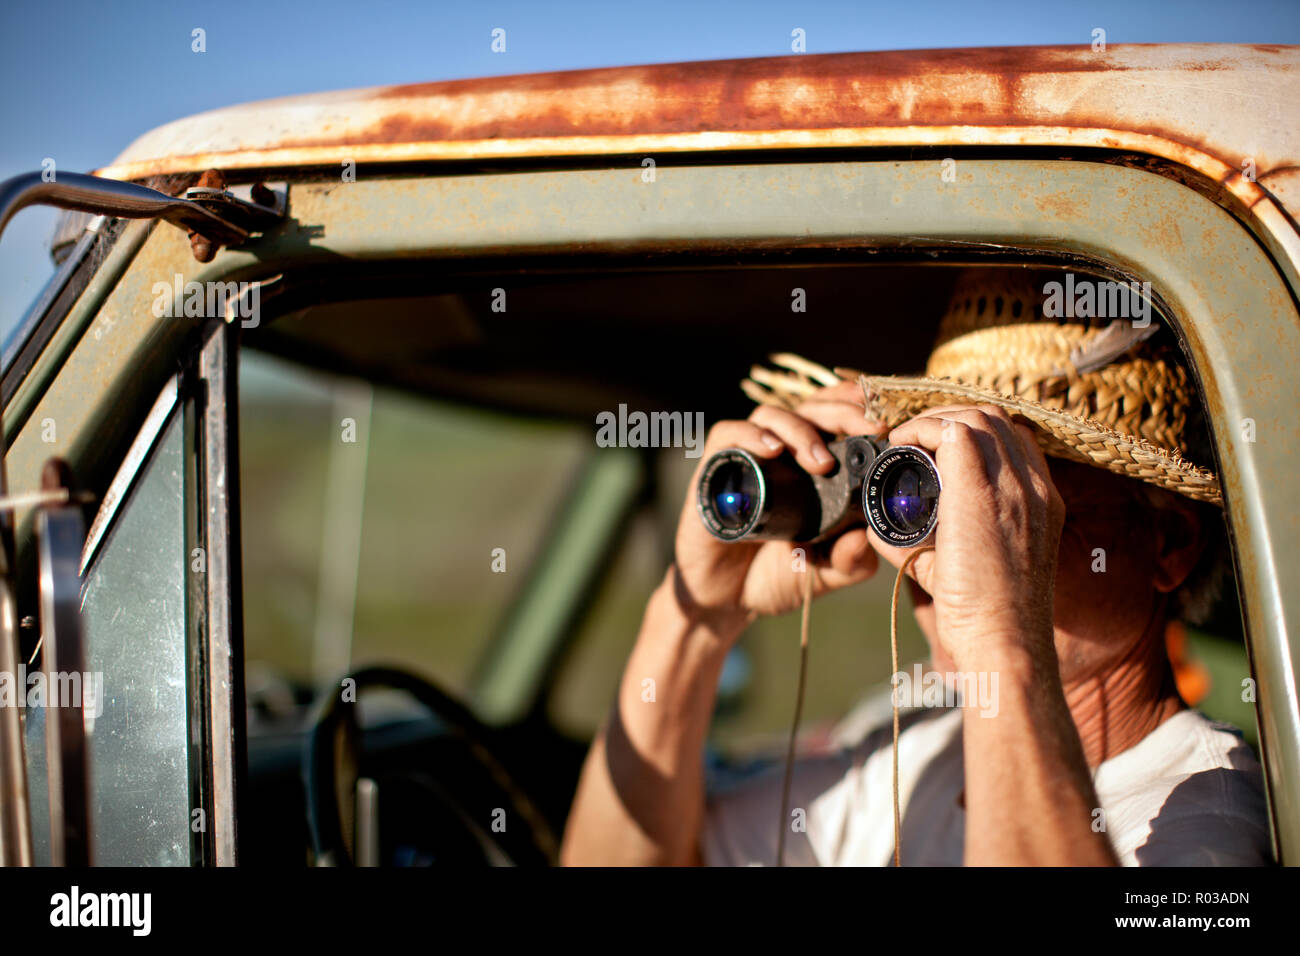 Man sitting in a pick-up truck looking through binoculars. Stock Photo